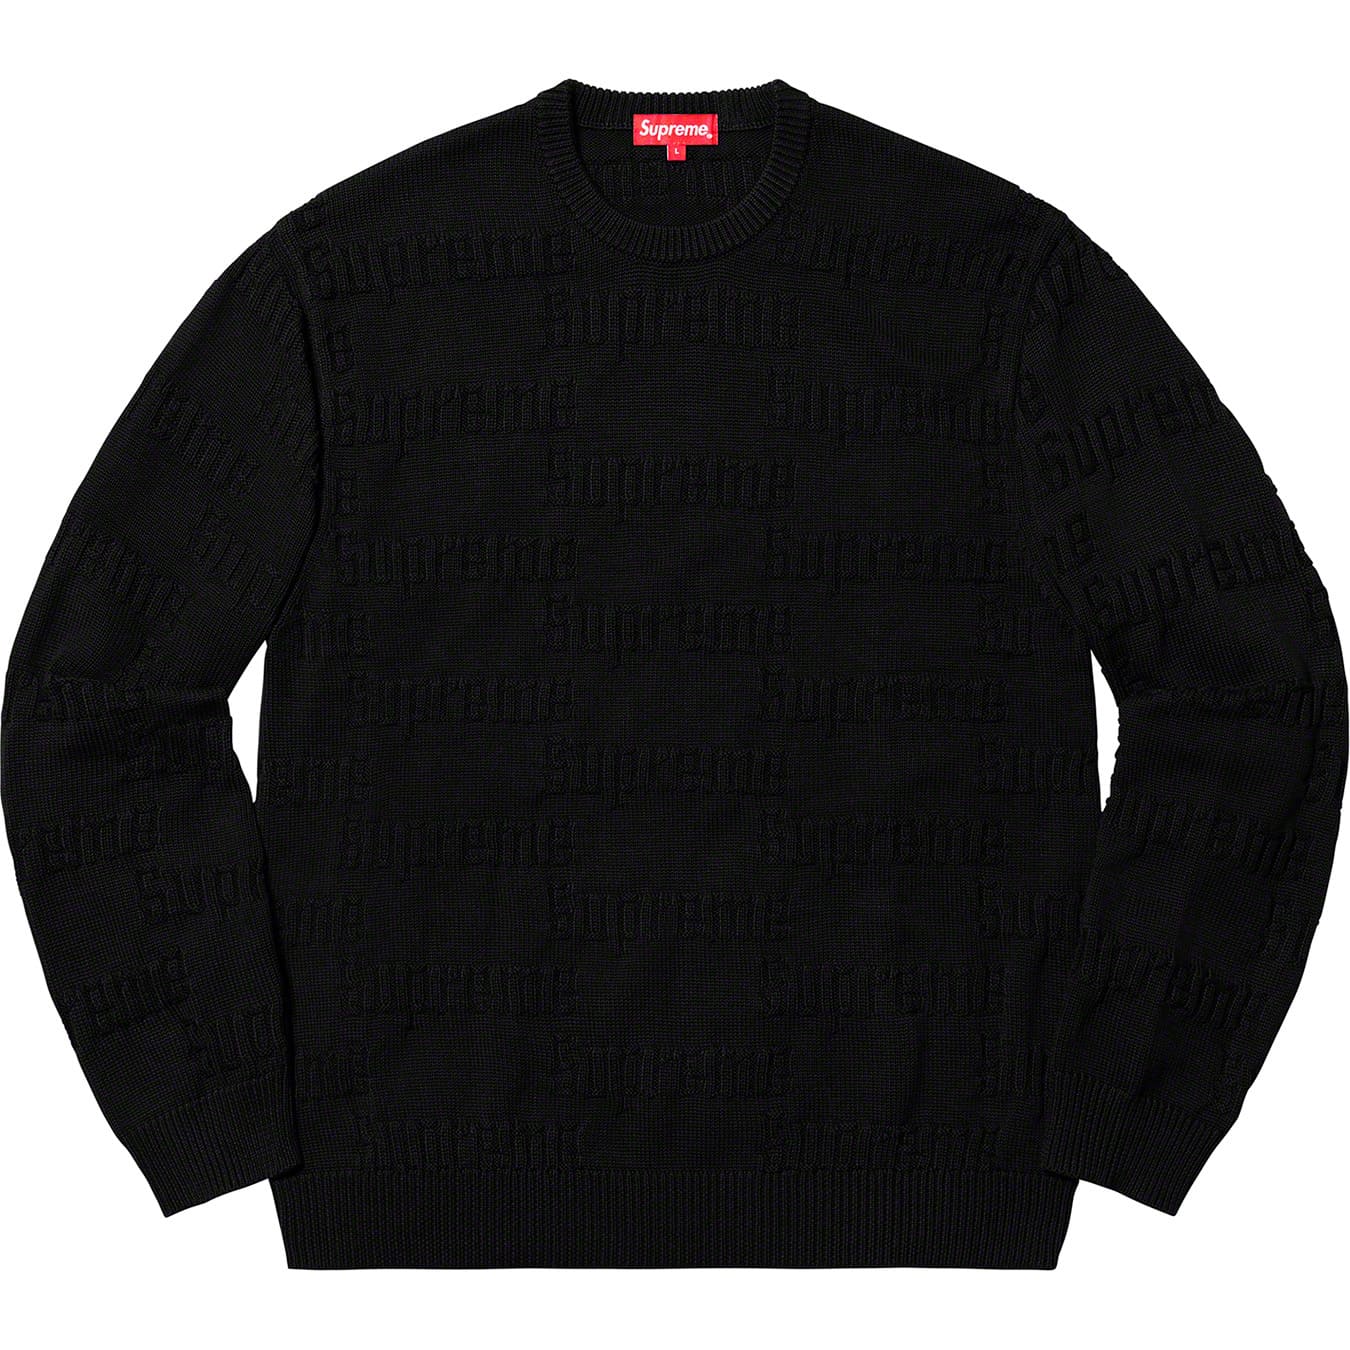 Supreme Raised Logo Sweater